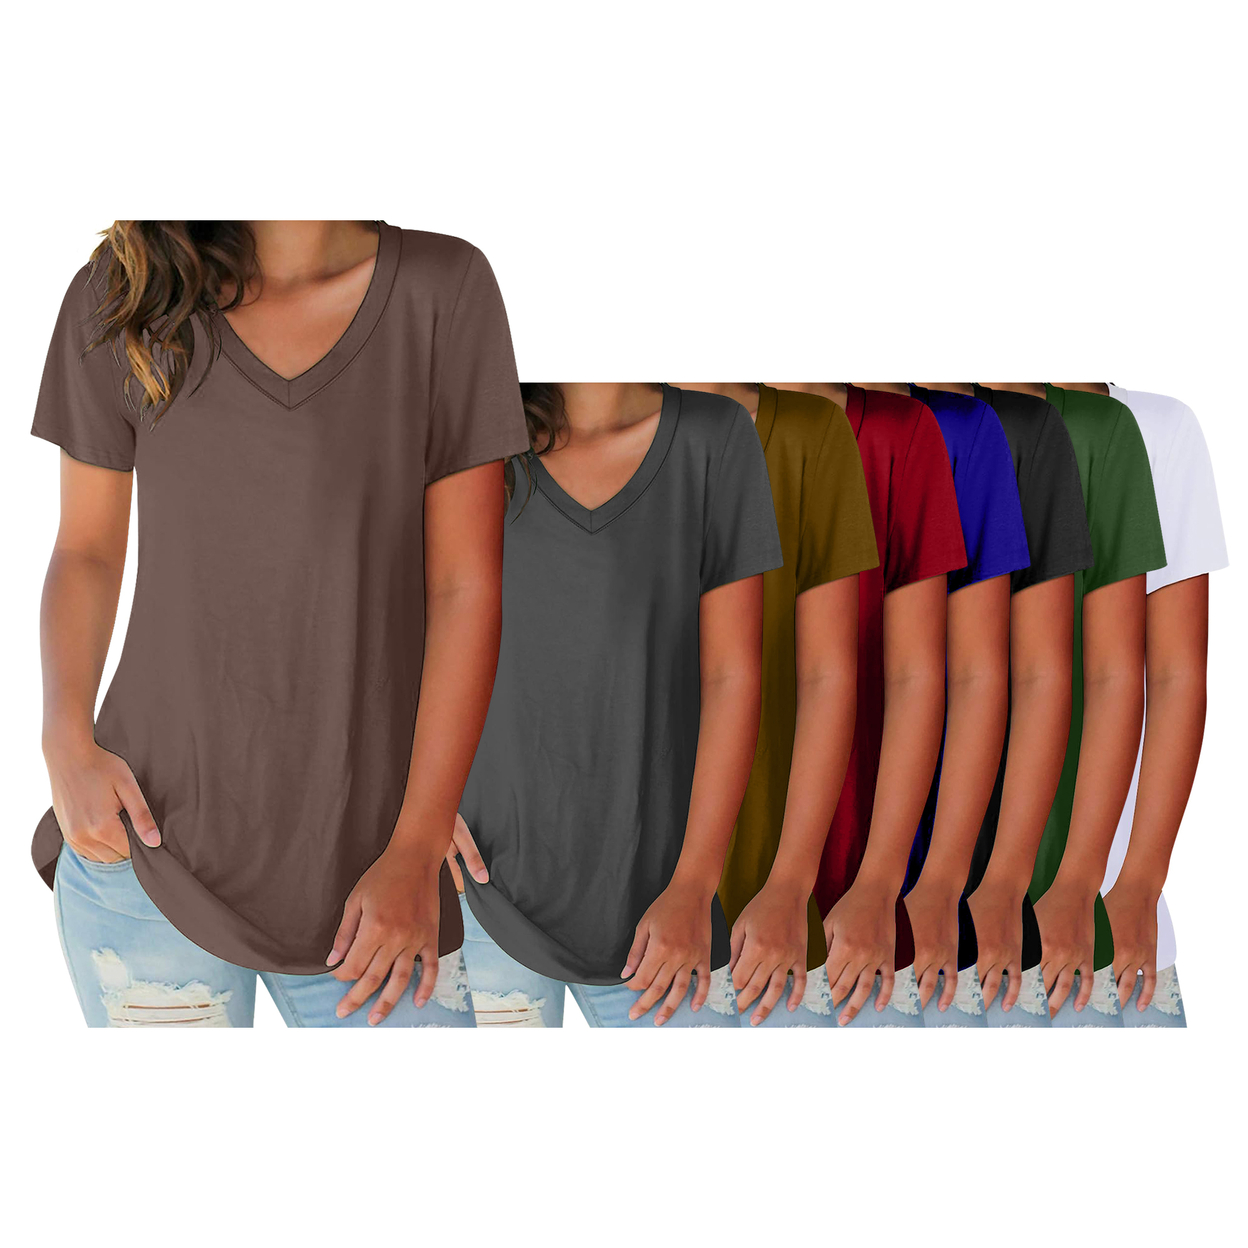 3-Pack: Women's Ultra Soft Smooth Cotton Blend Basic V-Neck Short Sleeve Shirts - Black, White, Green, X-large